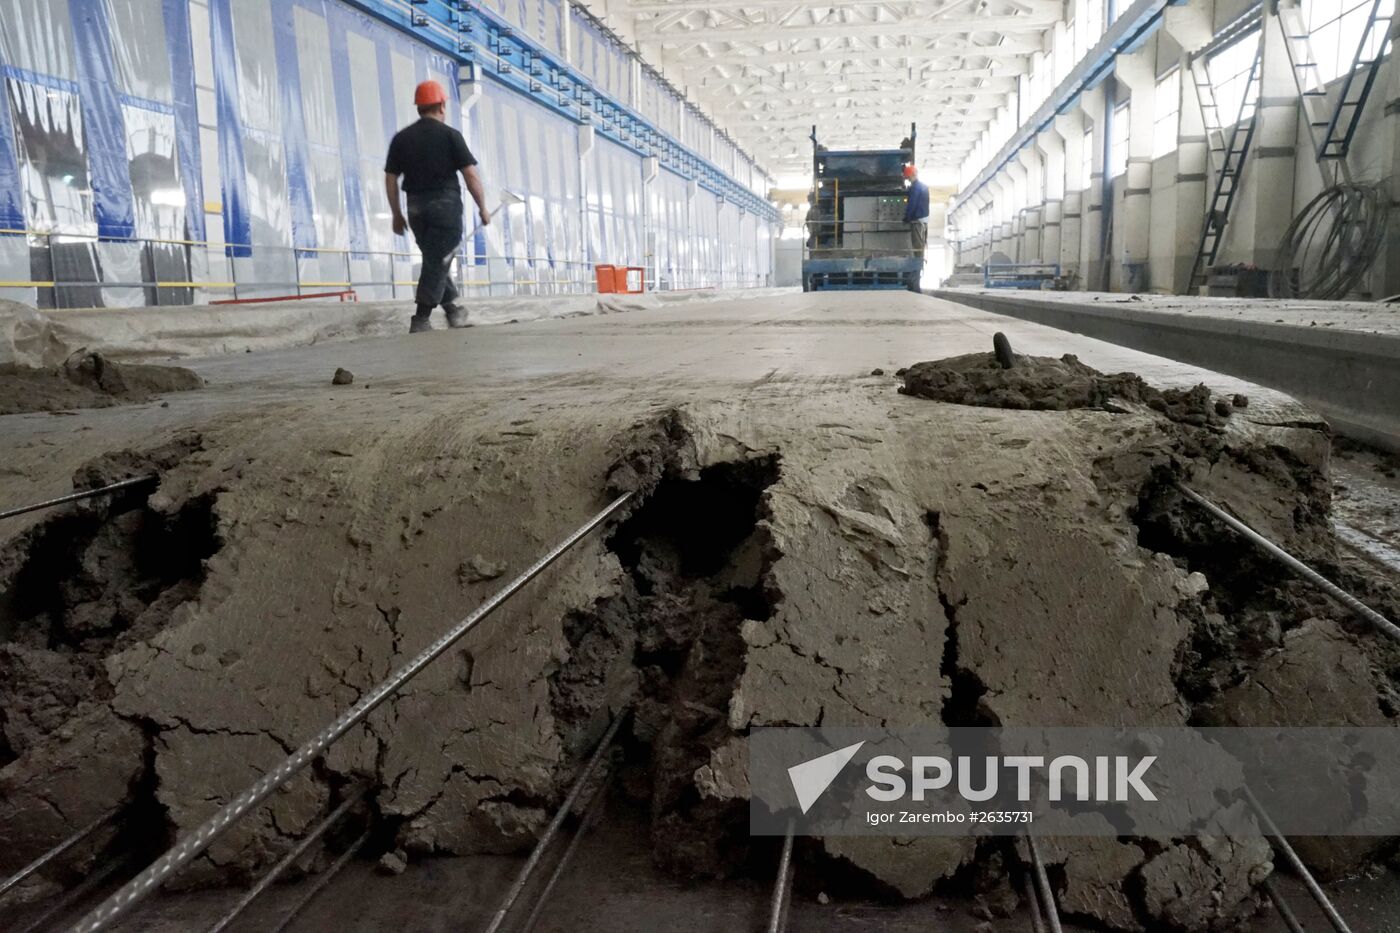 Reinforced Concrete Structures Plant #1 in Kaliningrad